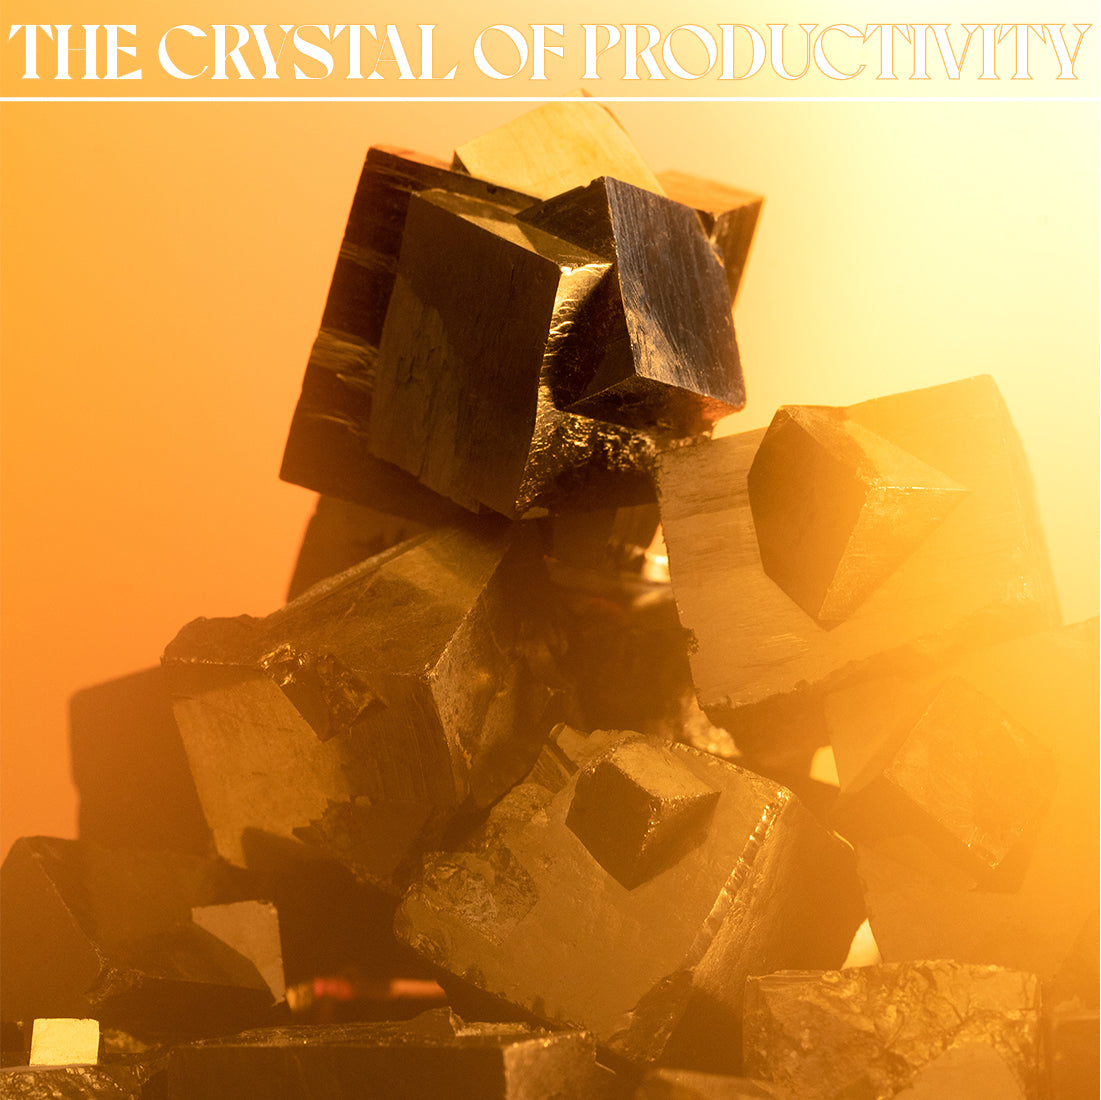 Pyrite Würfel - "Hustle" Kristall. Bedeutung: Produktivität.